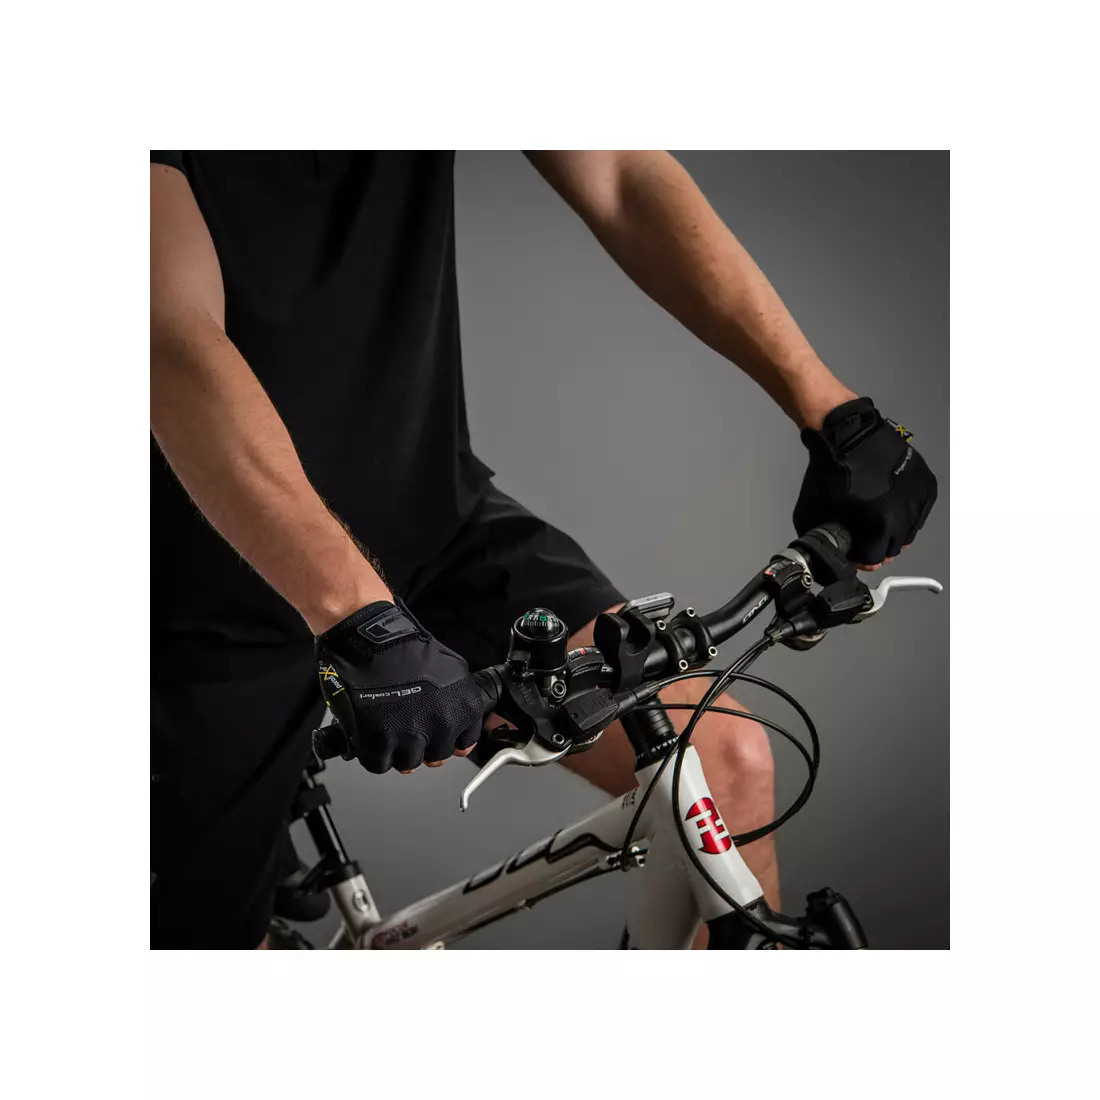 CHIBA GEL COMFORT cyklistické rukavice, čierne, 3040518